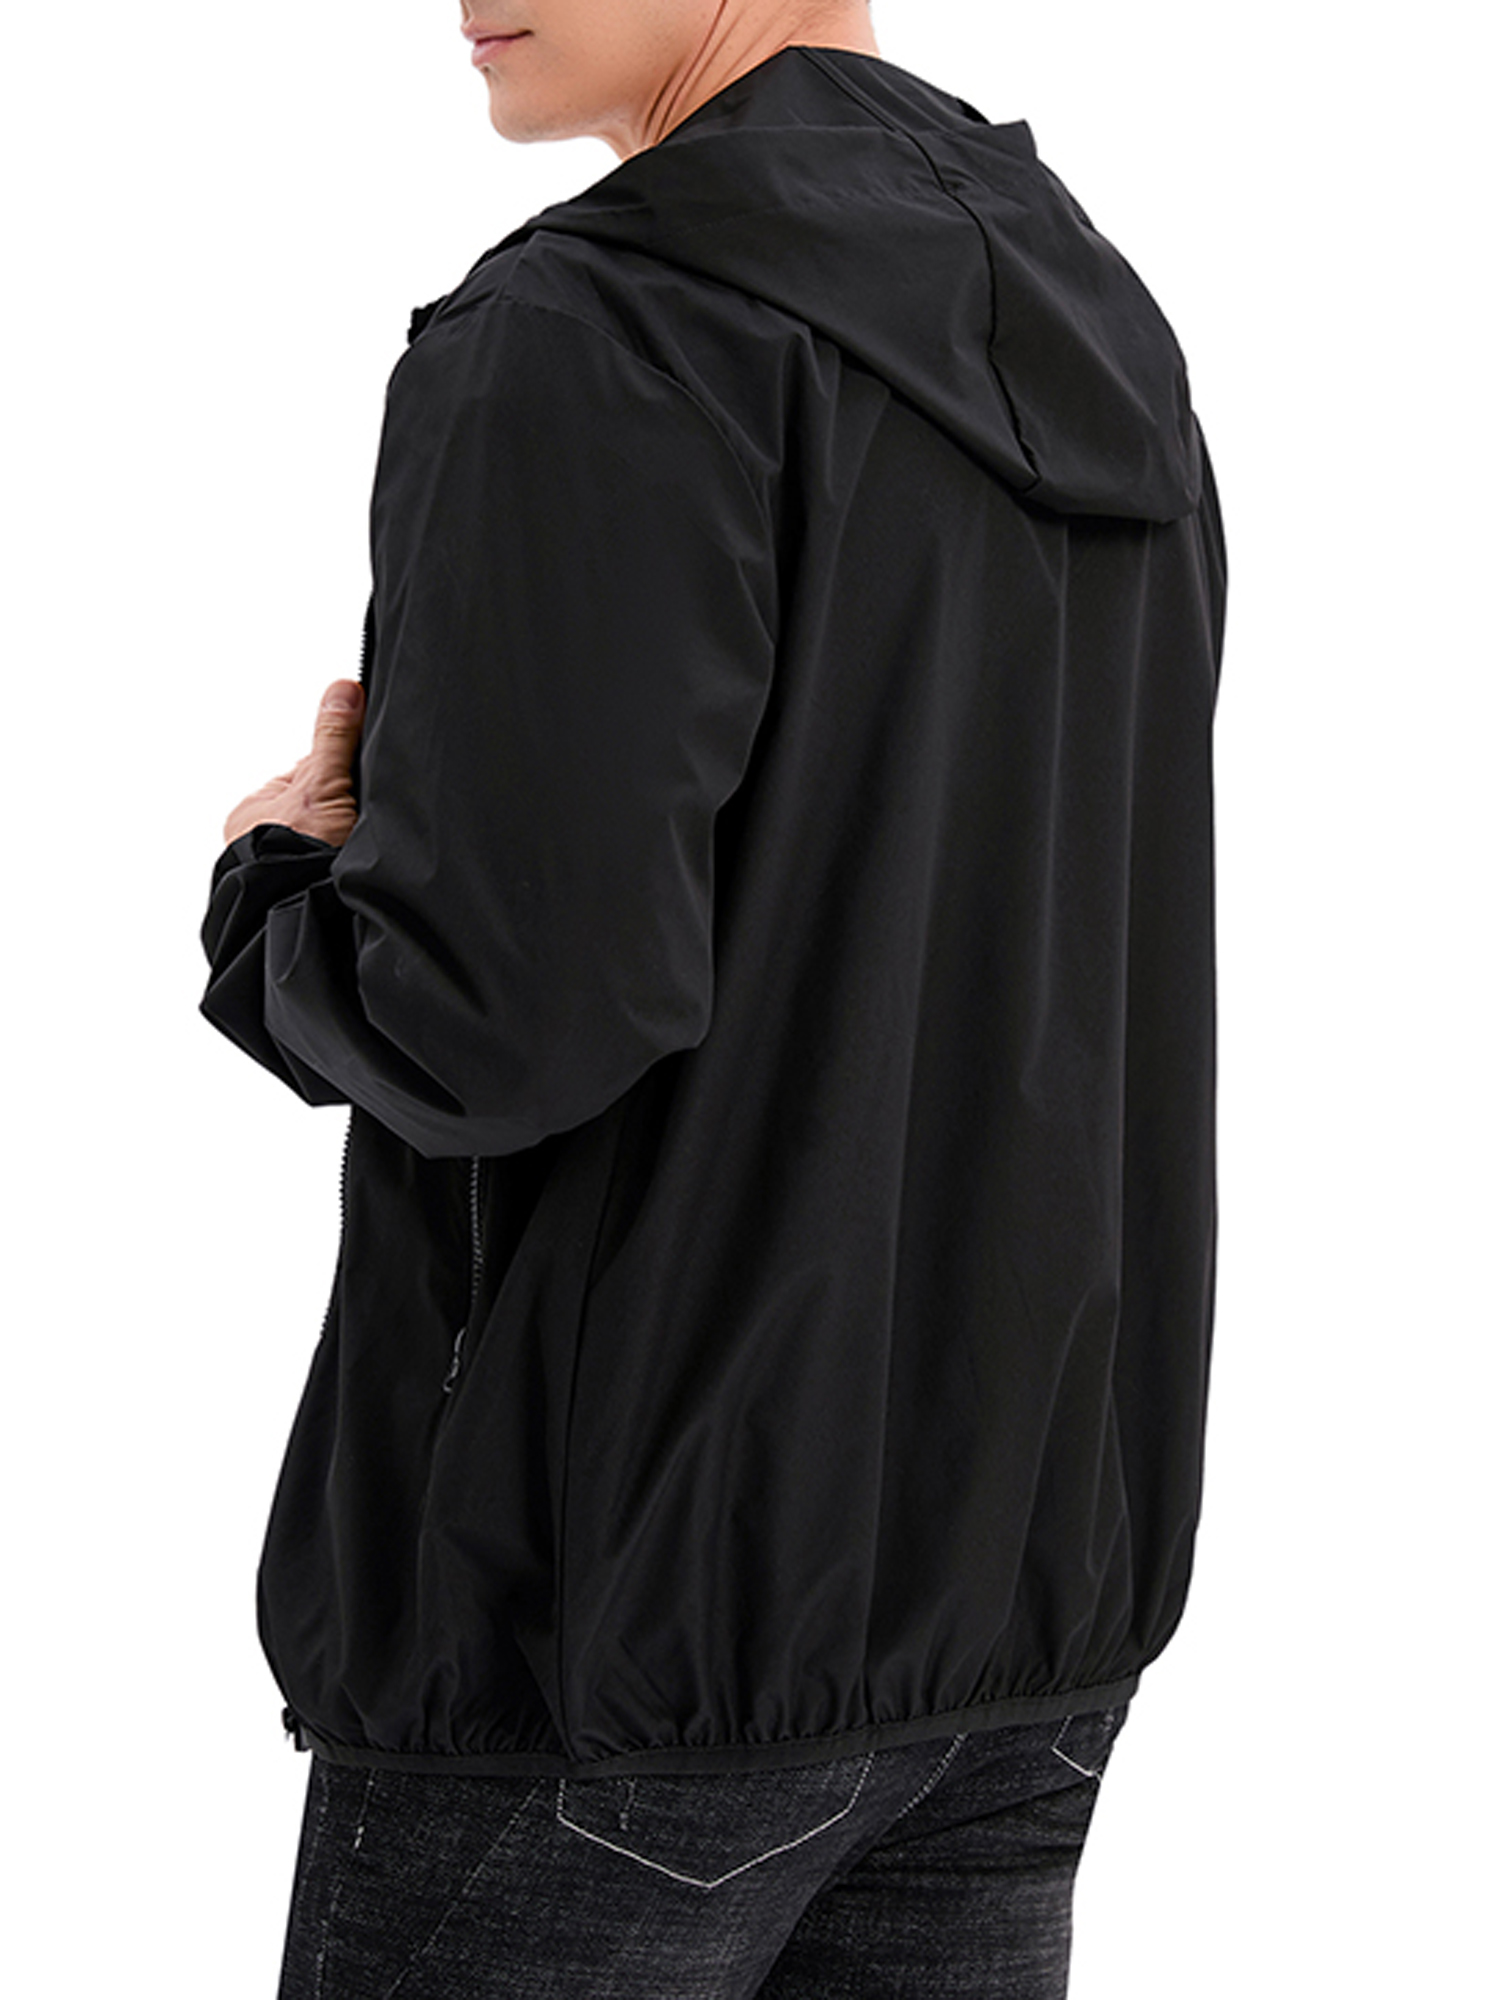 LELINTA Men's Big and Tall Outdoor Lightweight Windbreaker Jacket Hooded Waterproof Rain Jacket Drawstring Hooded Zip-Up Sport Windbreaker, up to Size 8XL, Black/ Grey - image 4 of 7